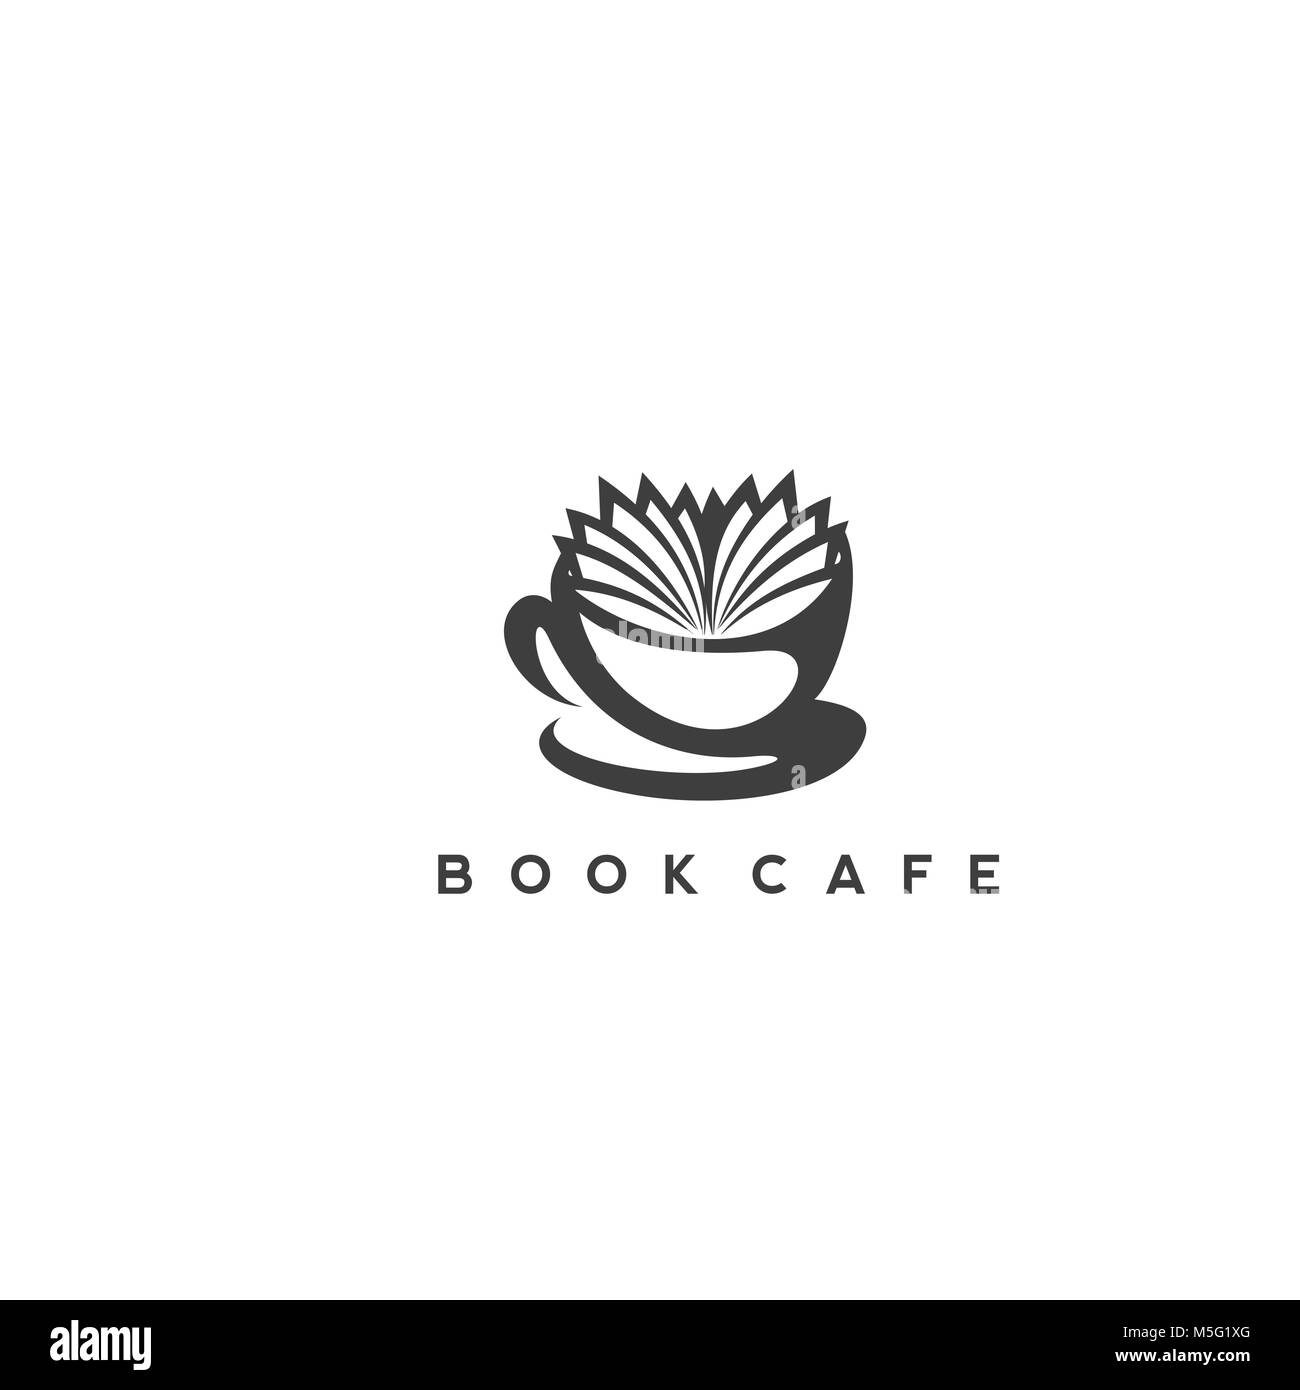 book cafe vector illustration. Stock Vector